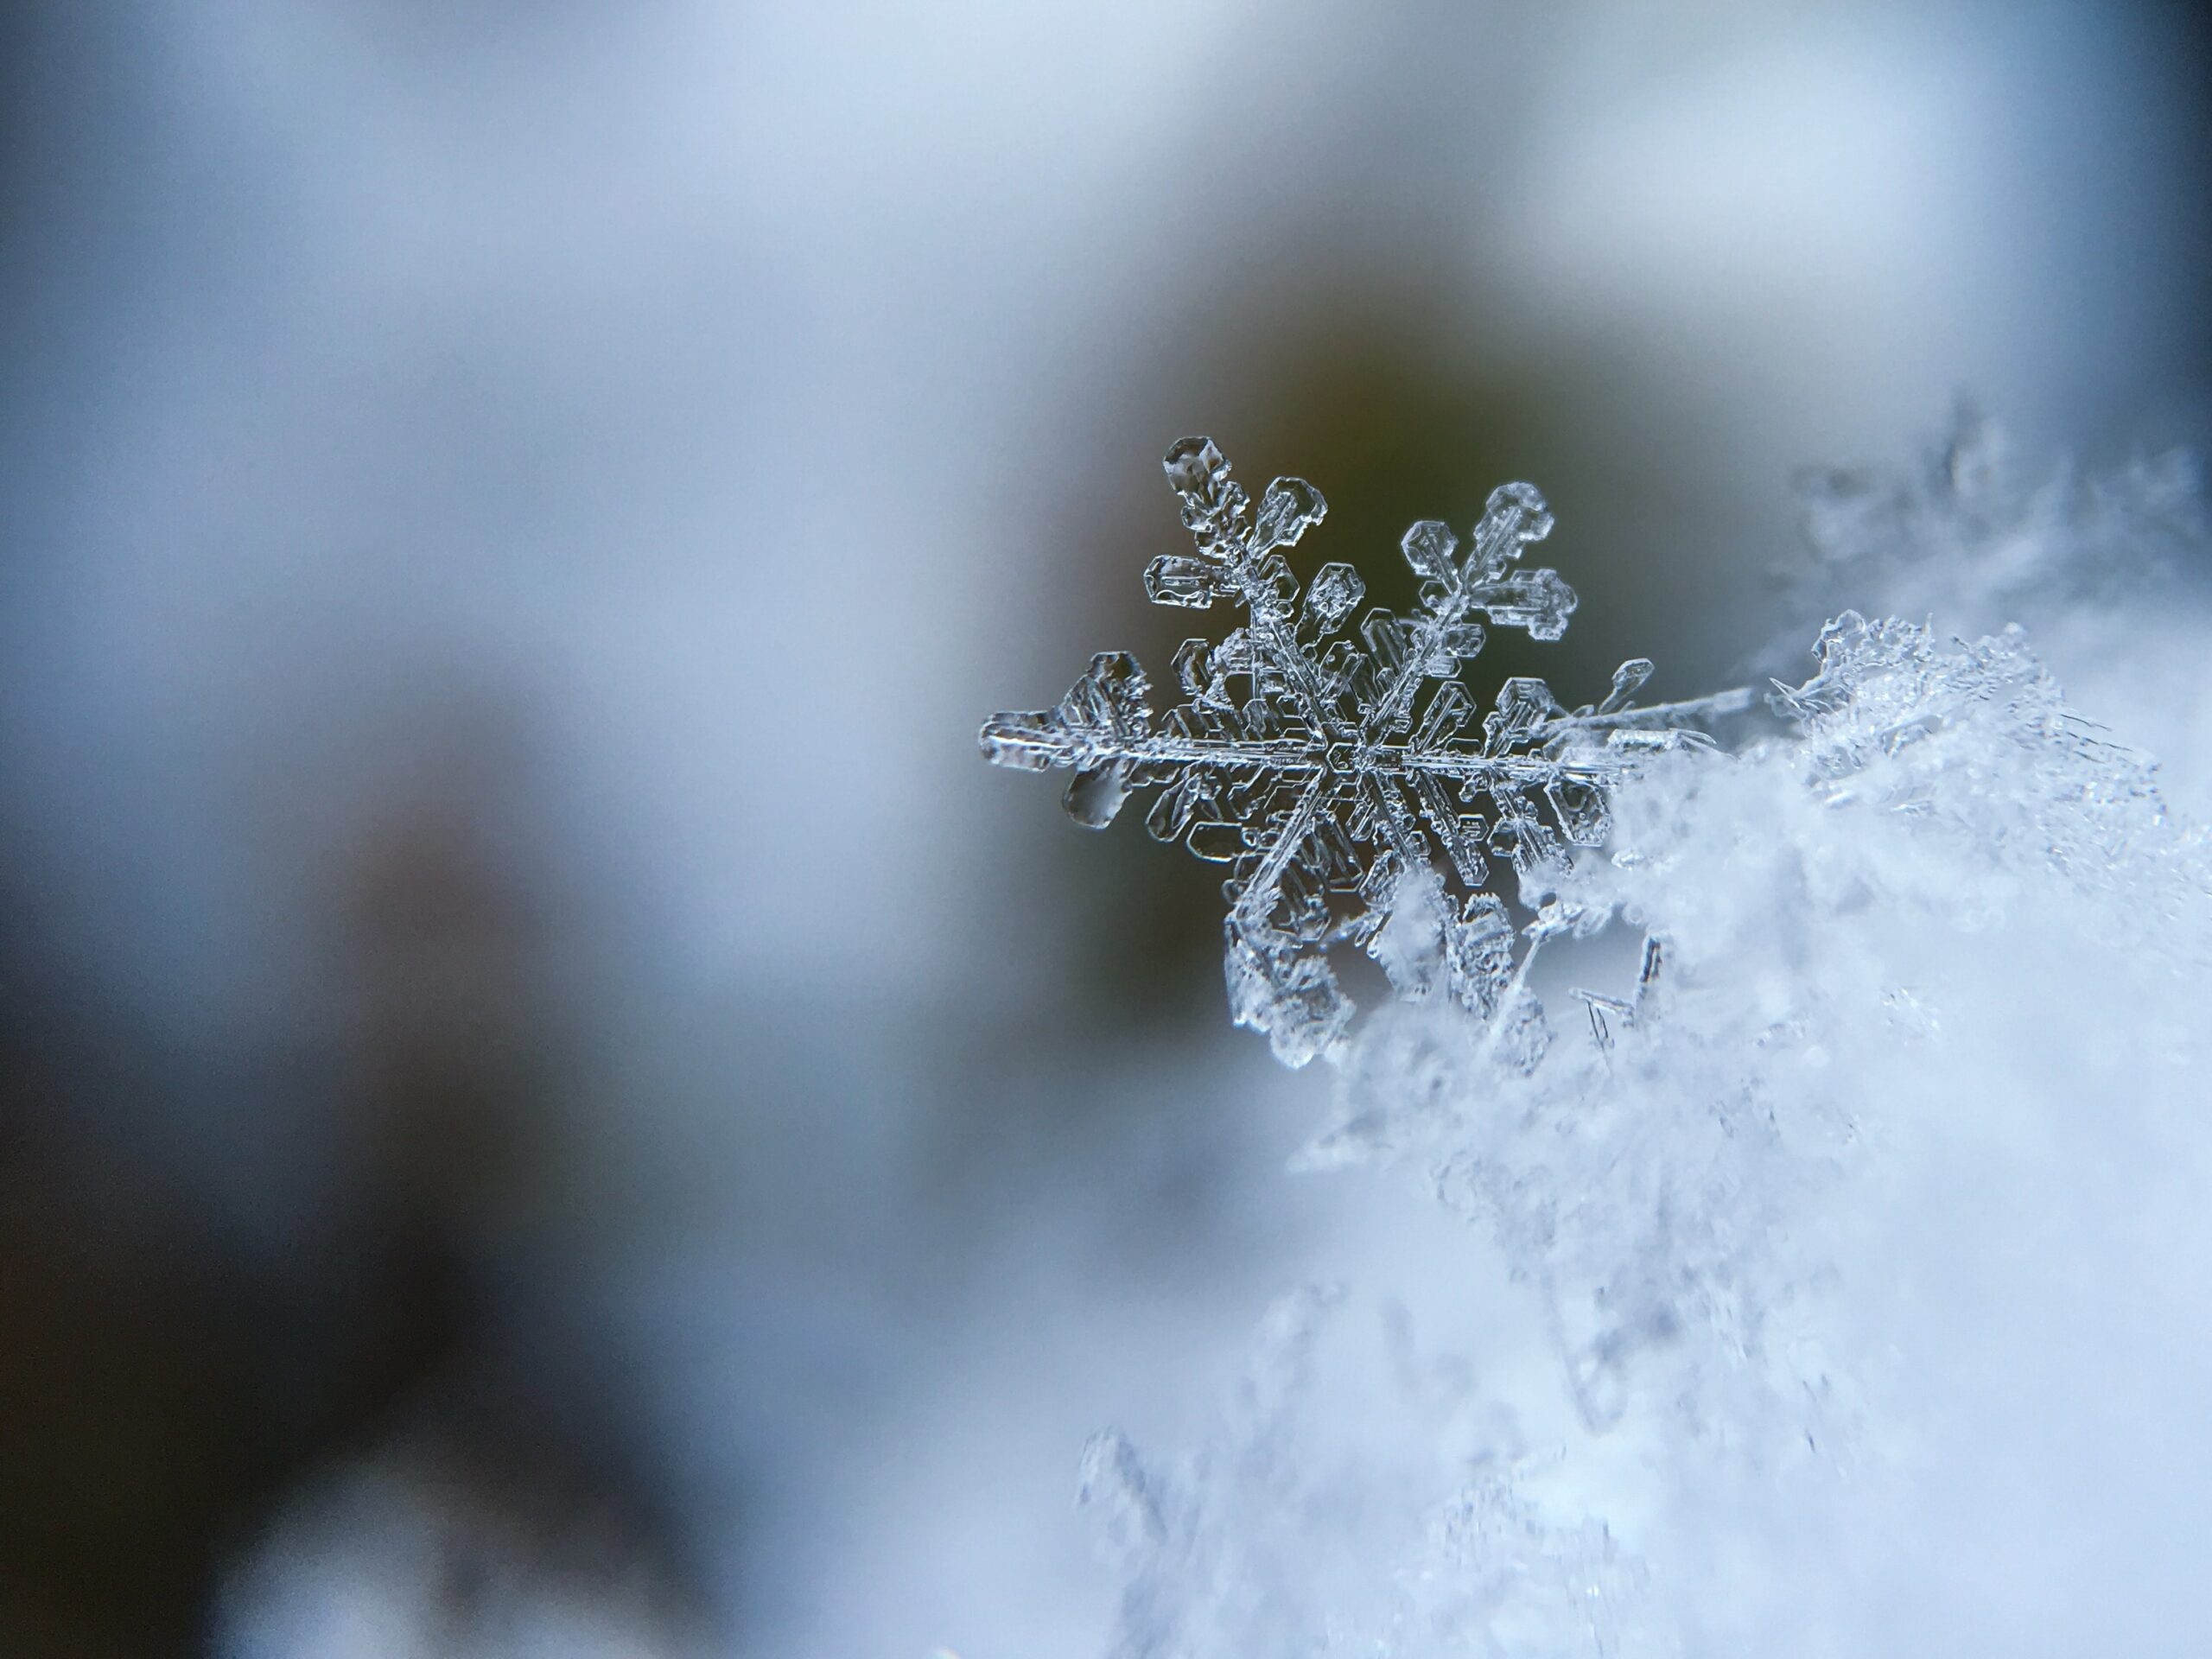 Close up of a snowflake